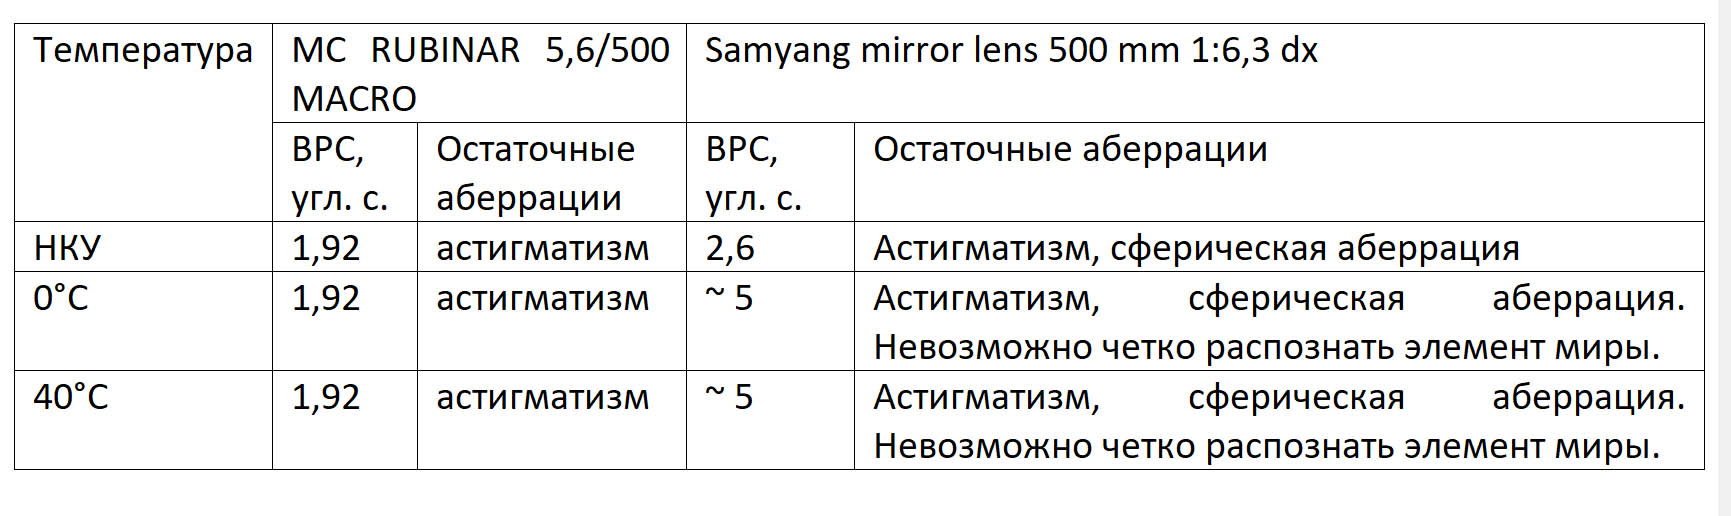 samyang-mirror-lens-500-mm-6-3-dx-lens-3